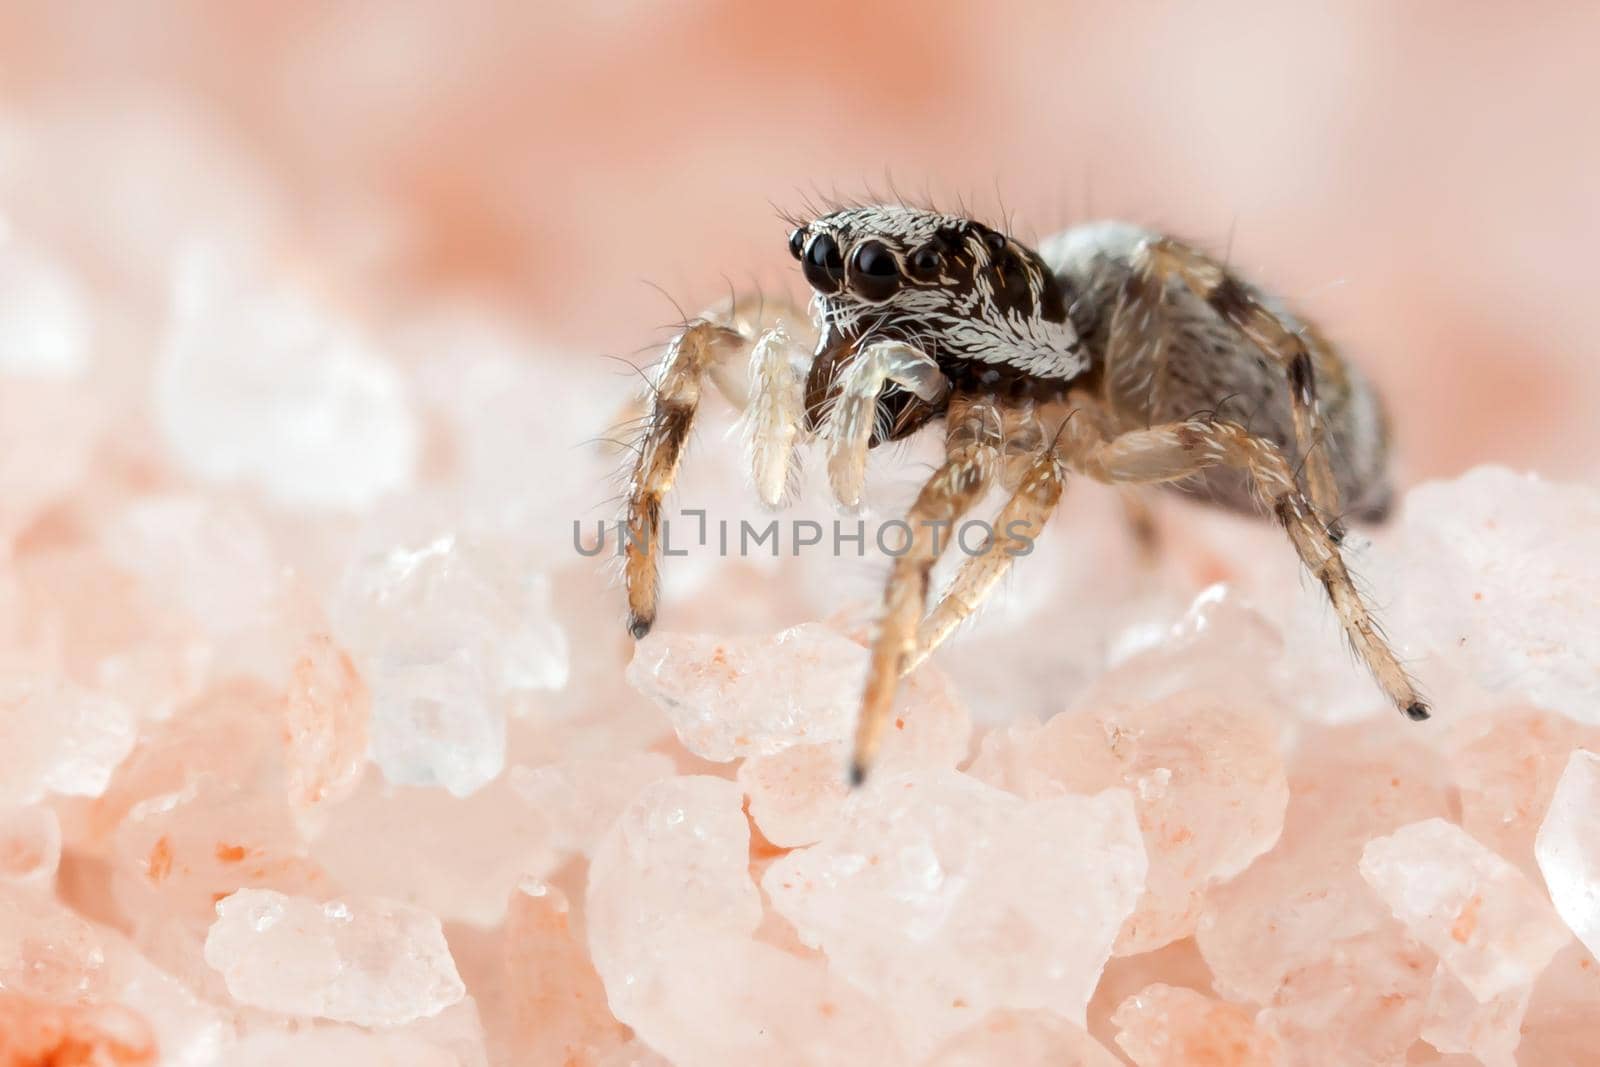 Jumping spider on Himalayan salt crystals by Lincikas